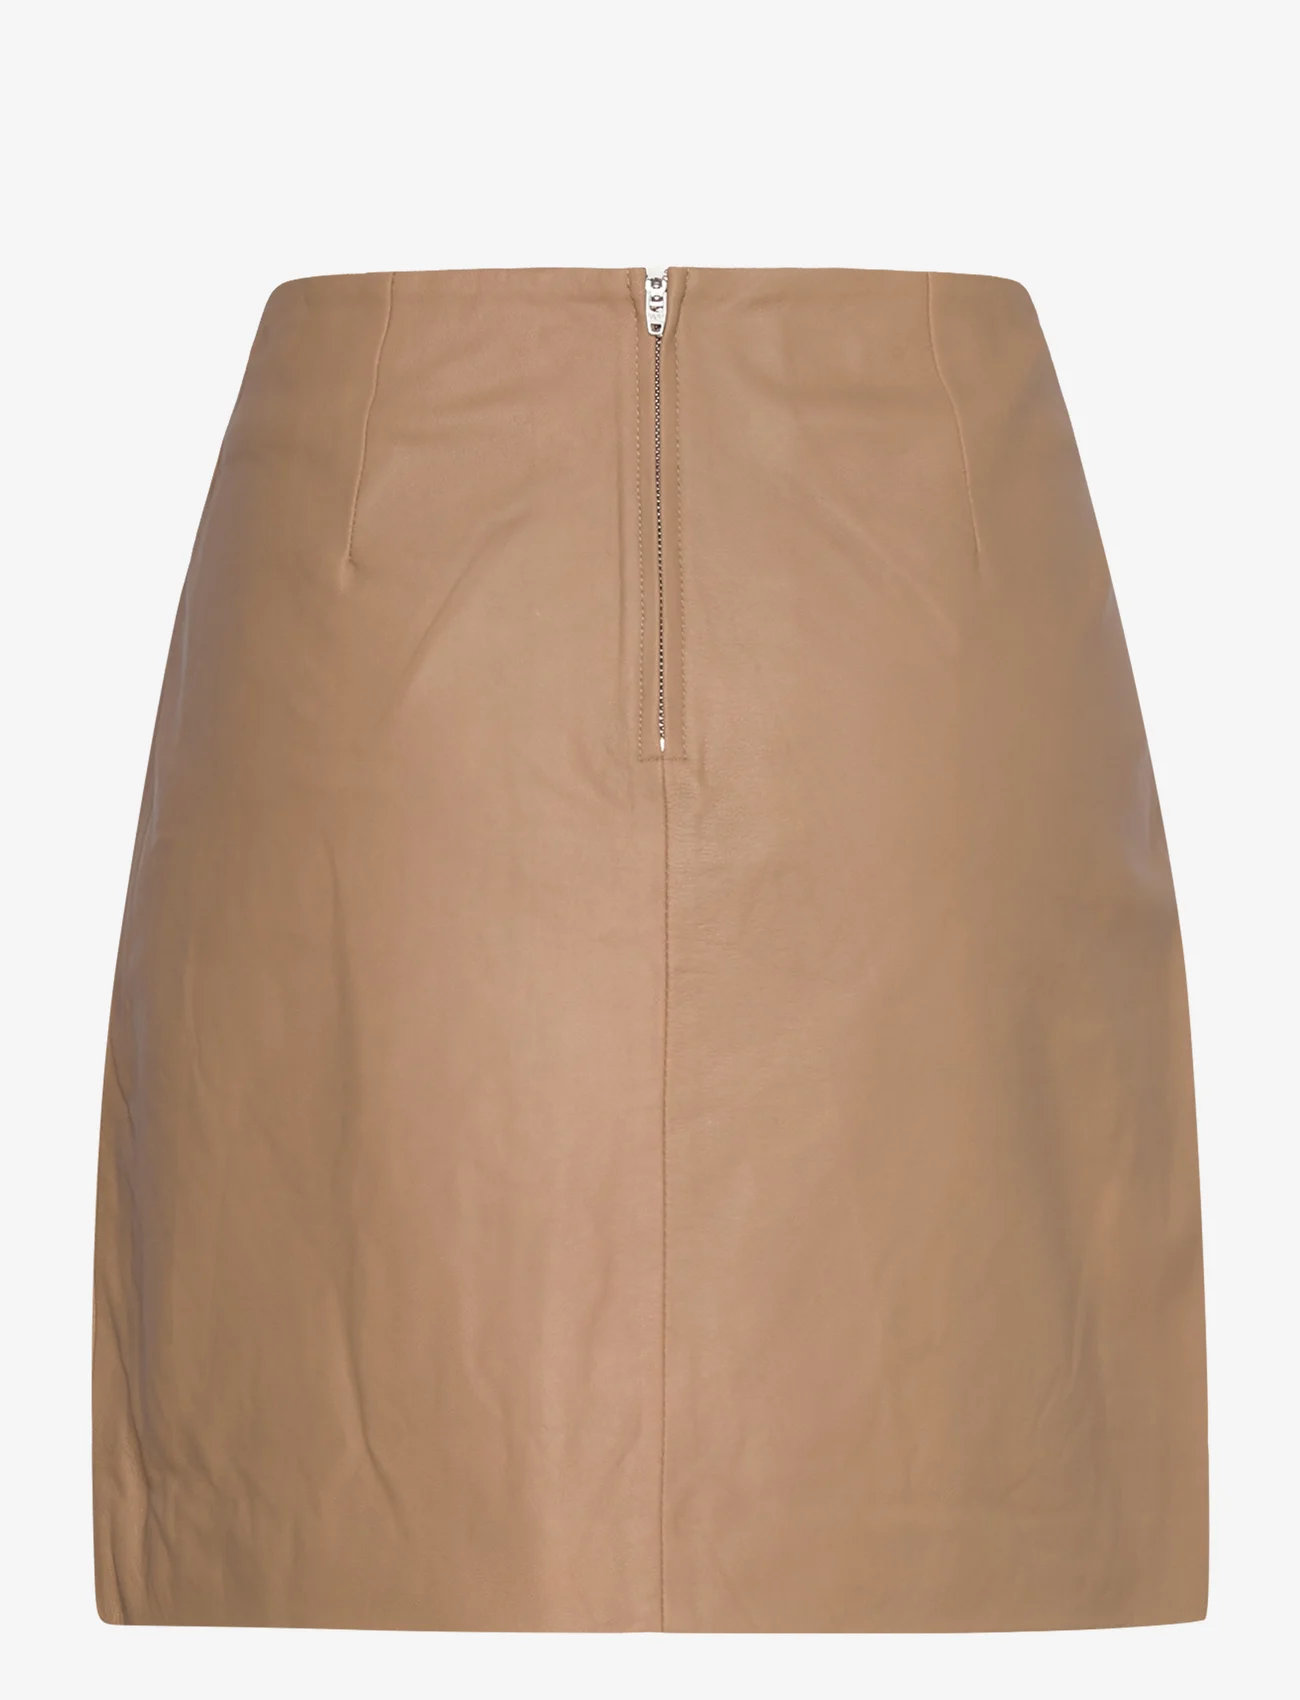 Soaked in Luxury - SLOlicia Leather Skirt - nederdele i læder - tiger's eye - 1